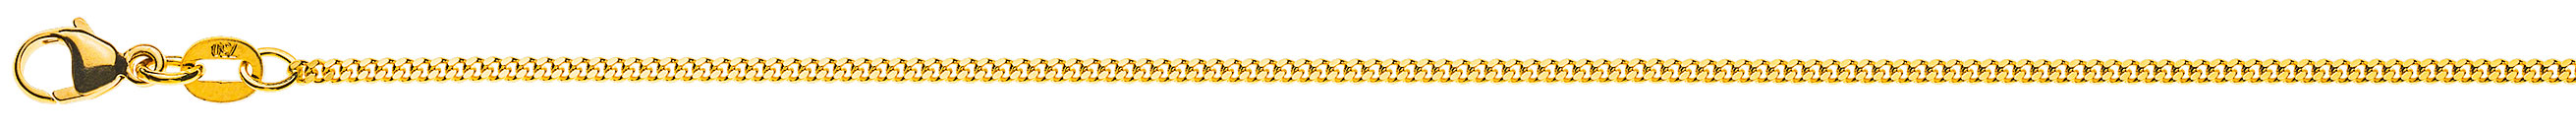 AURONOS Prestige Necklace yellow gold 18K curb chain polished 55cm 1.6mm